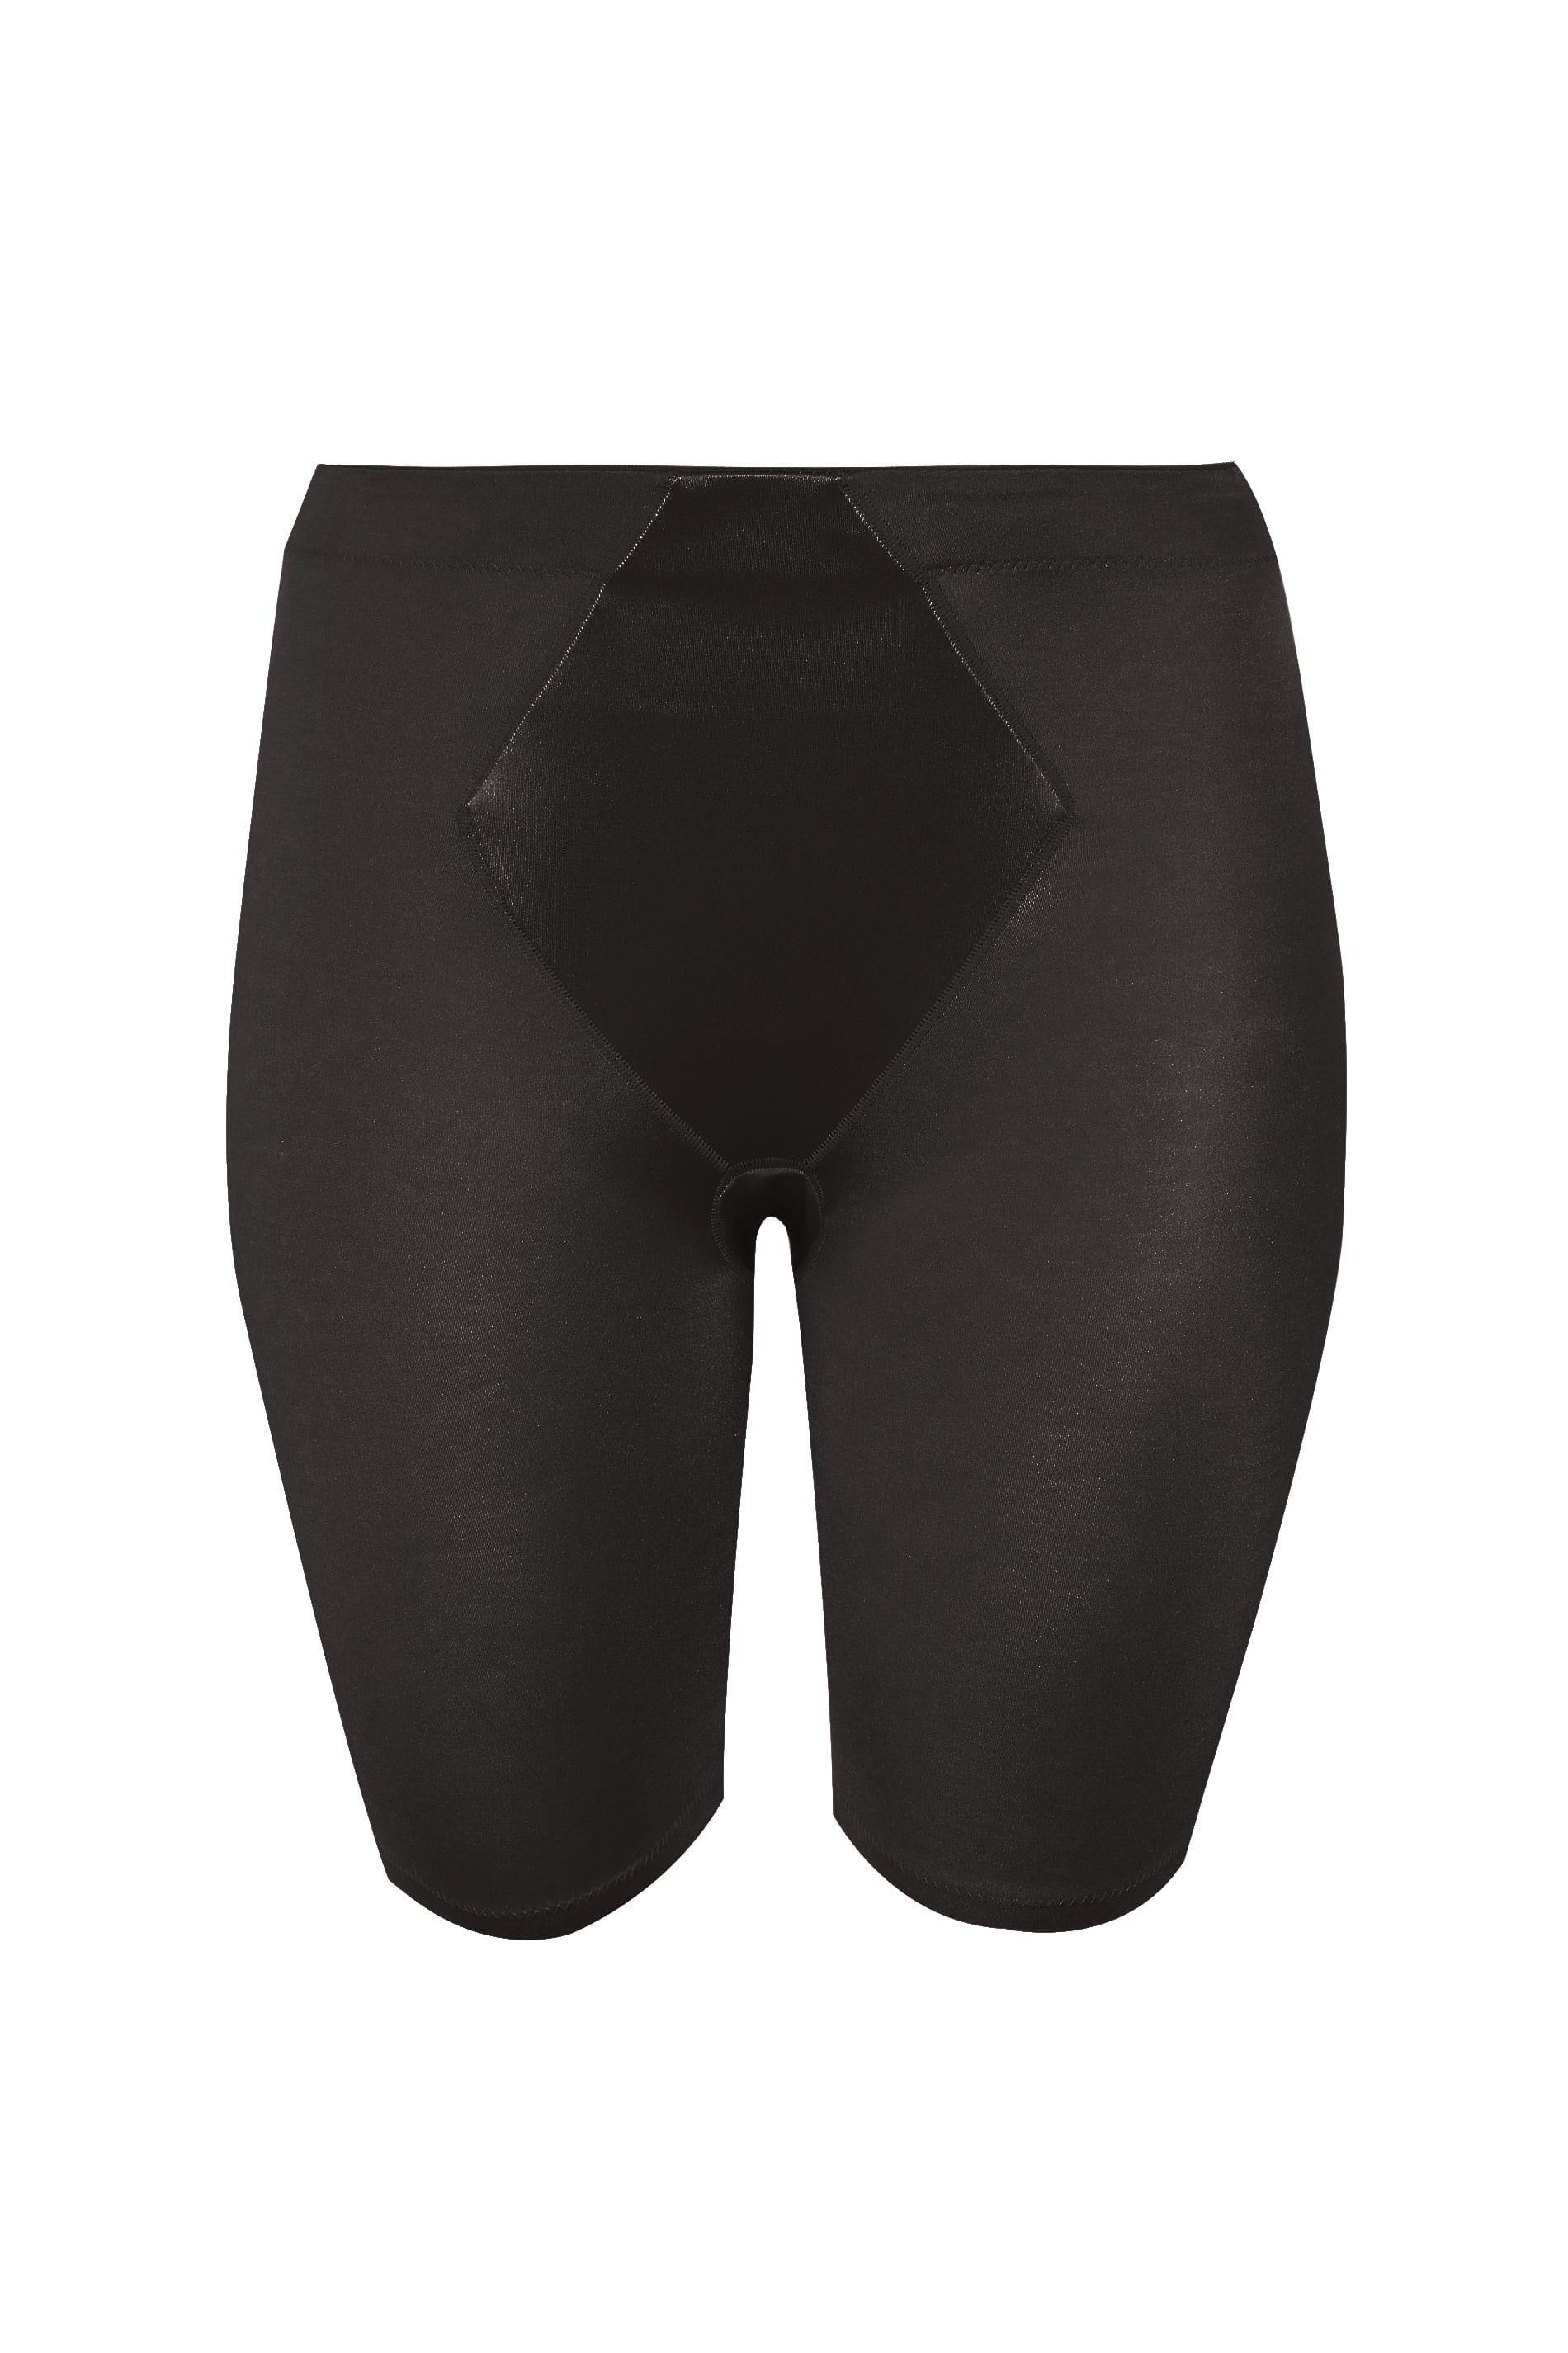 Debenhams Black Invisible High Waist Shapewear Pants. Firm Control. Size 20